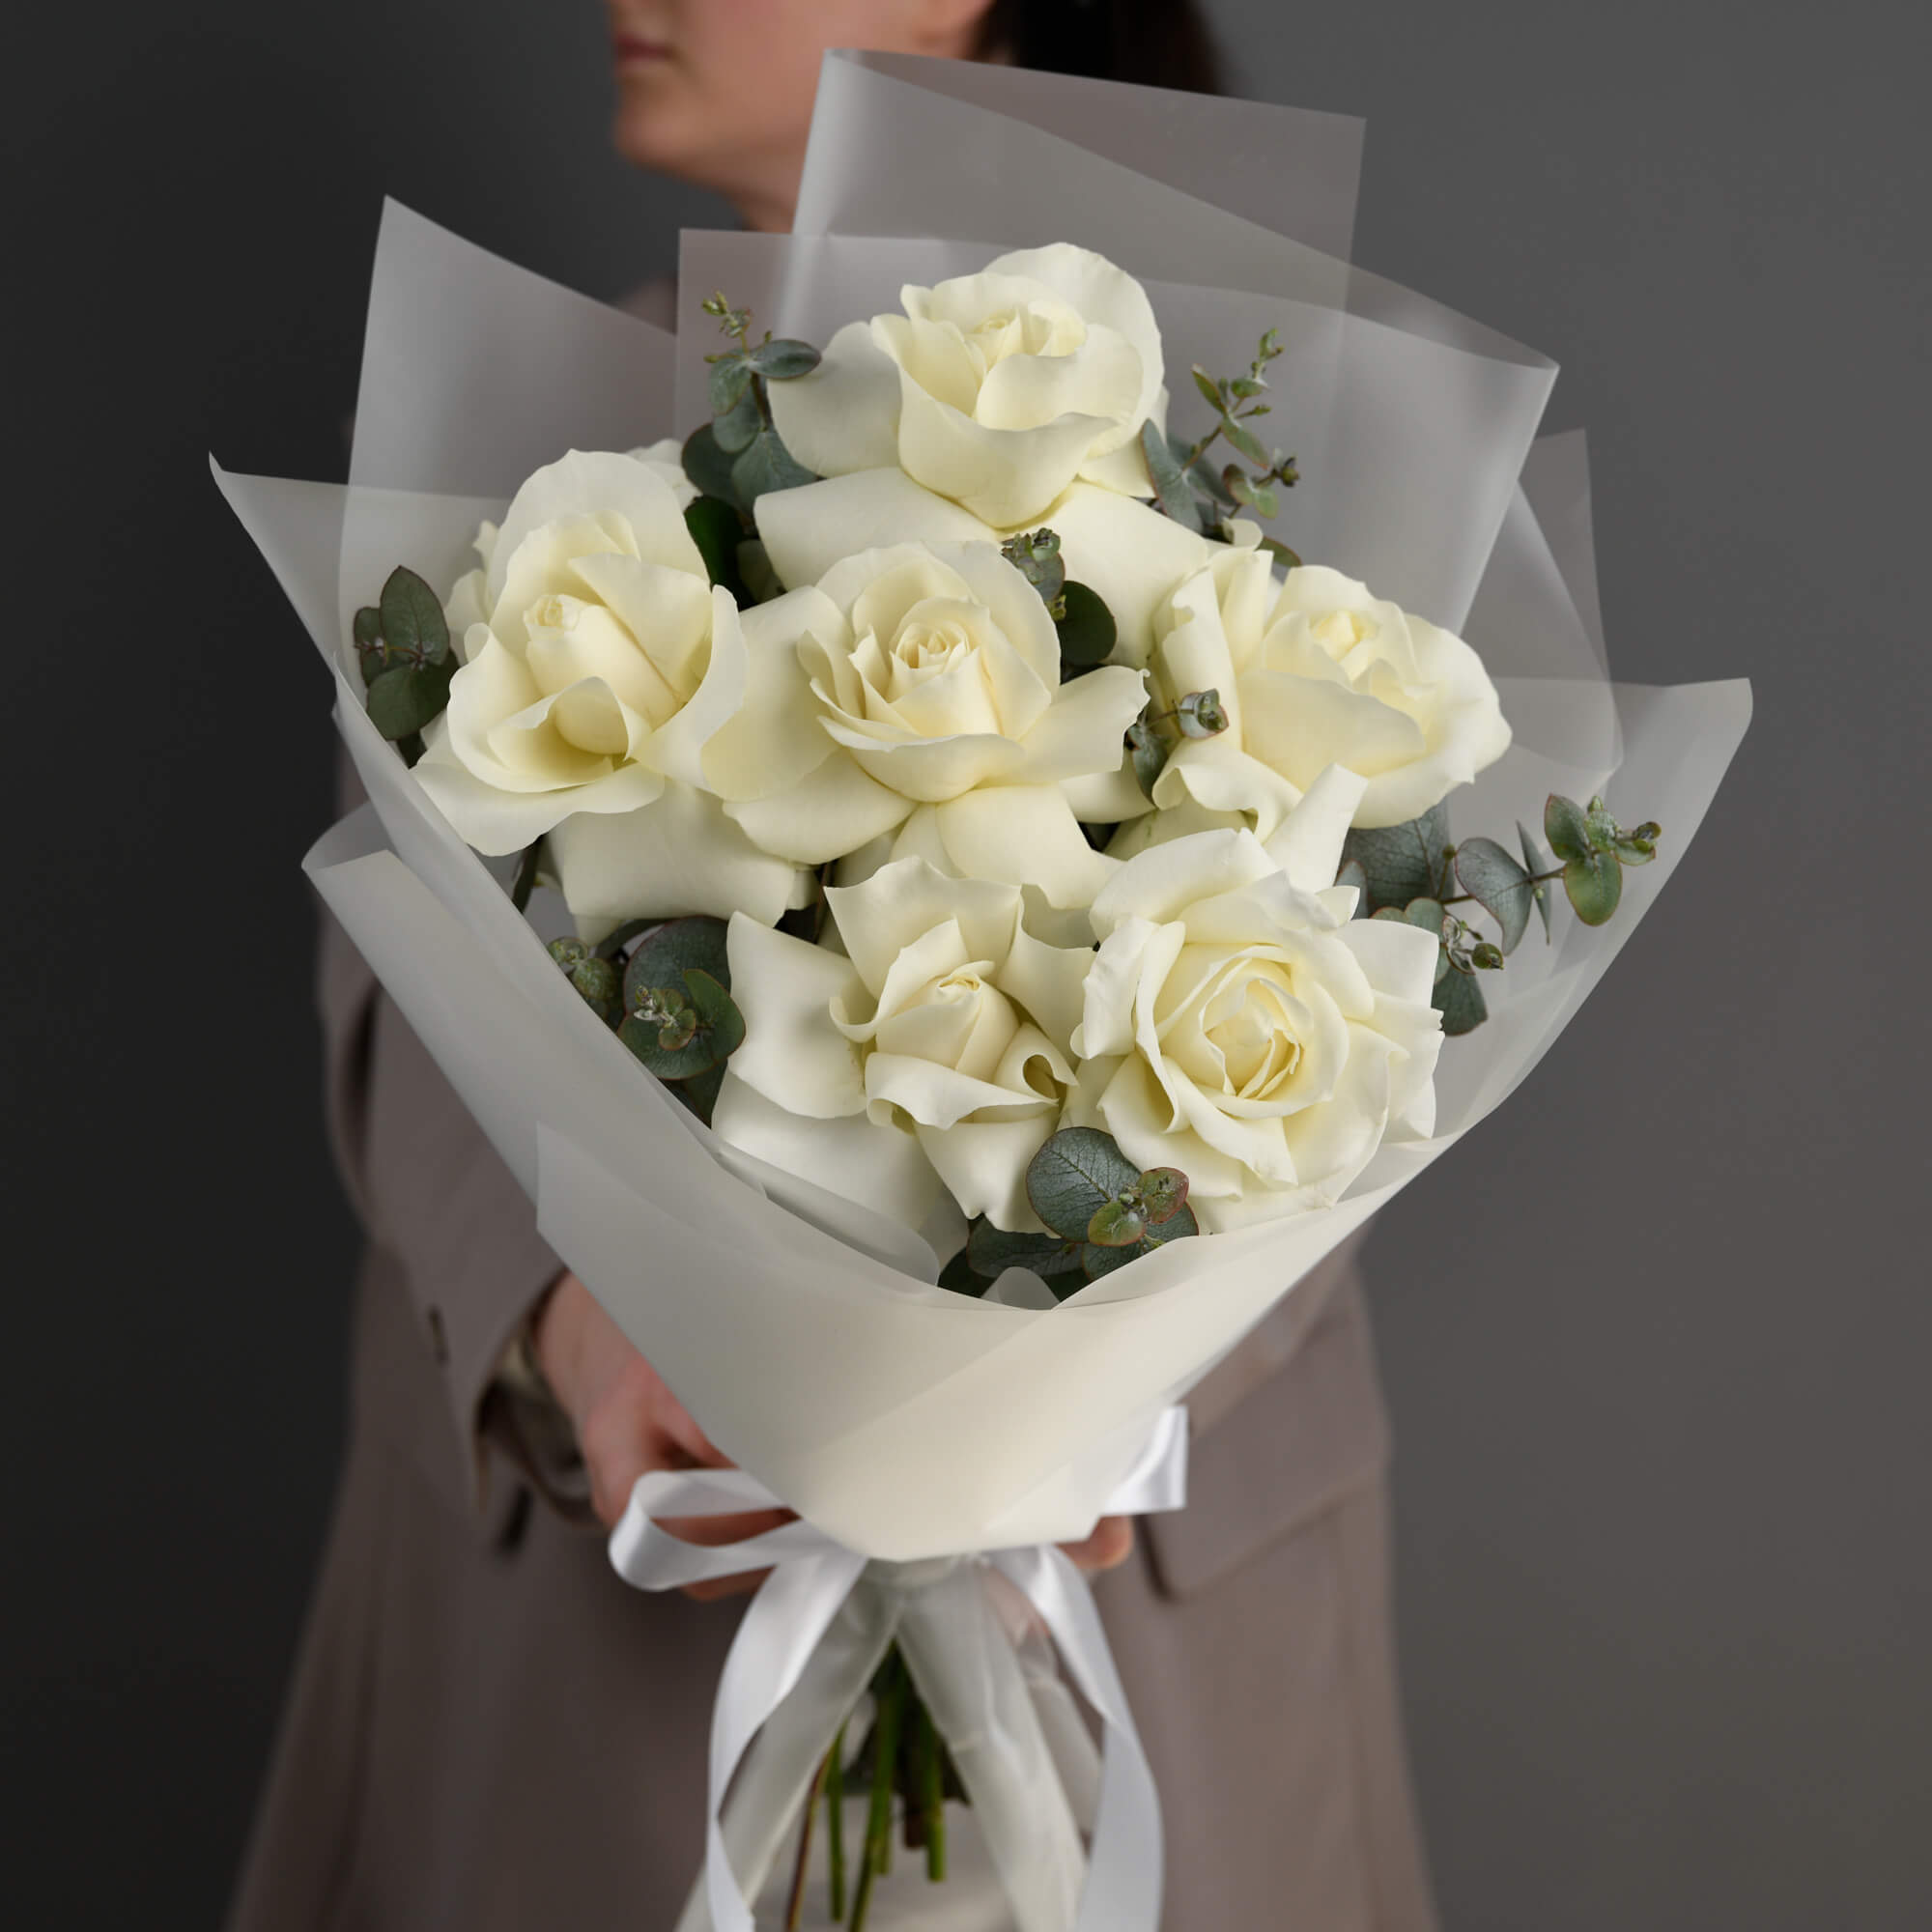 Buchet cu 7 trandafiri albi speciali si eucalipt